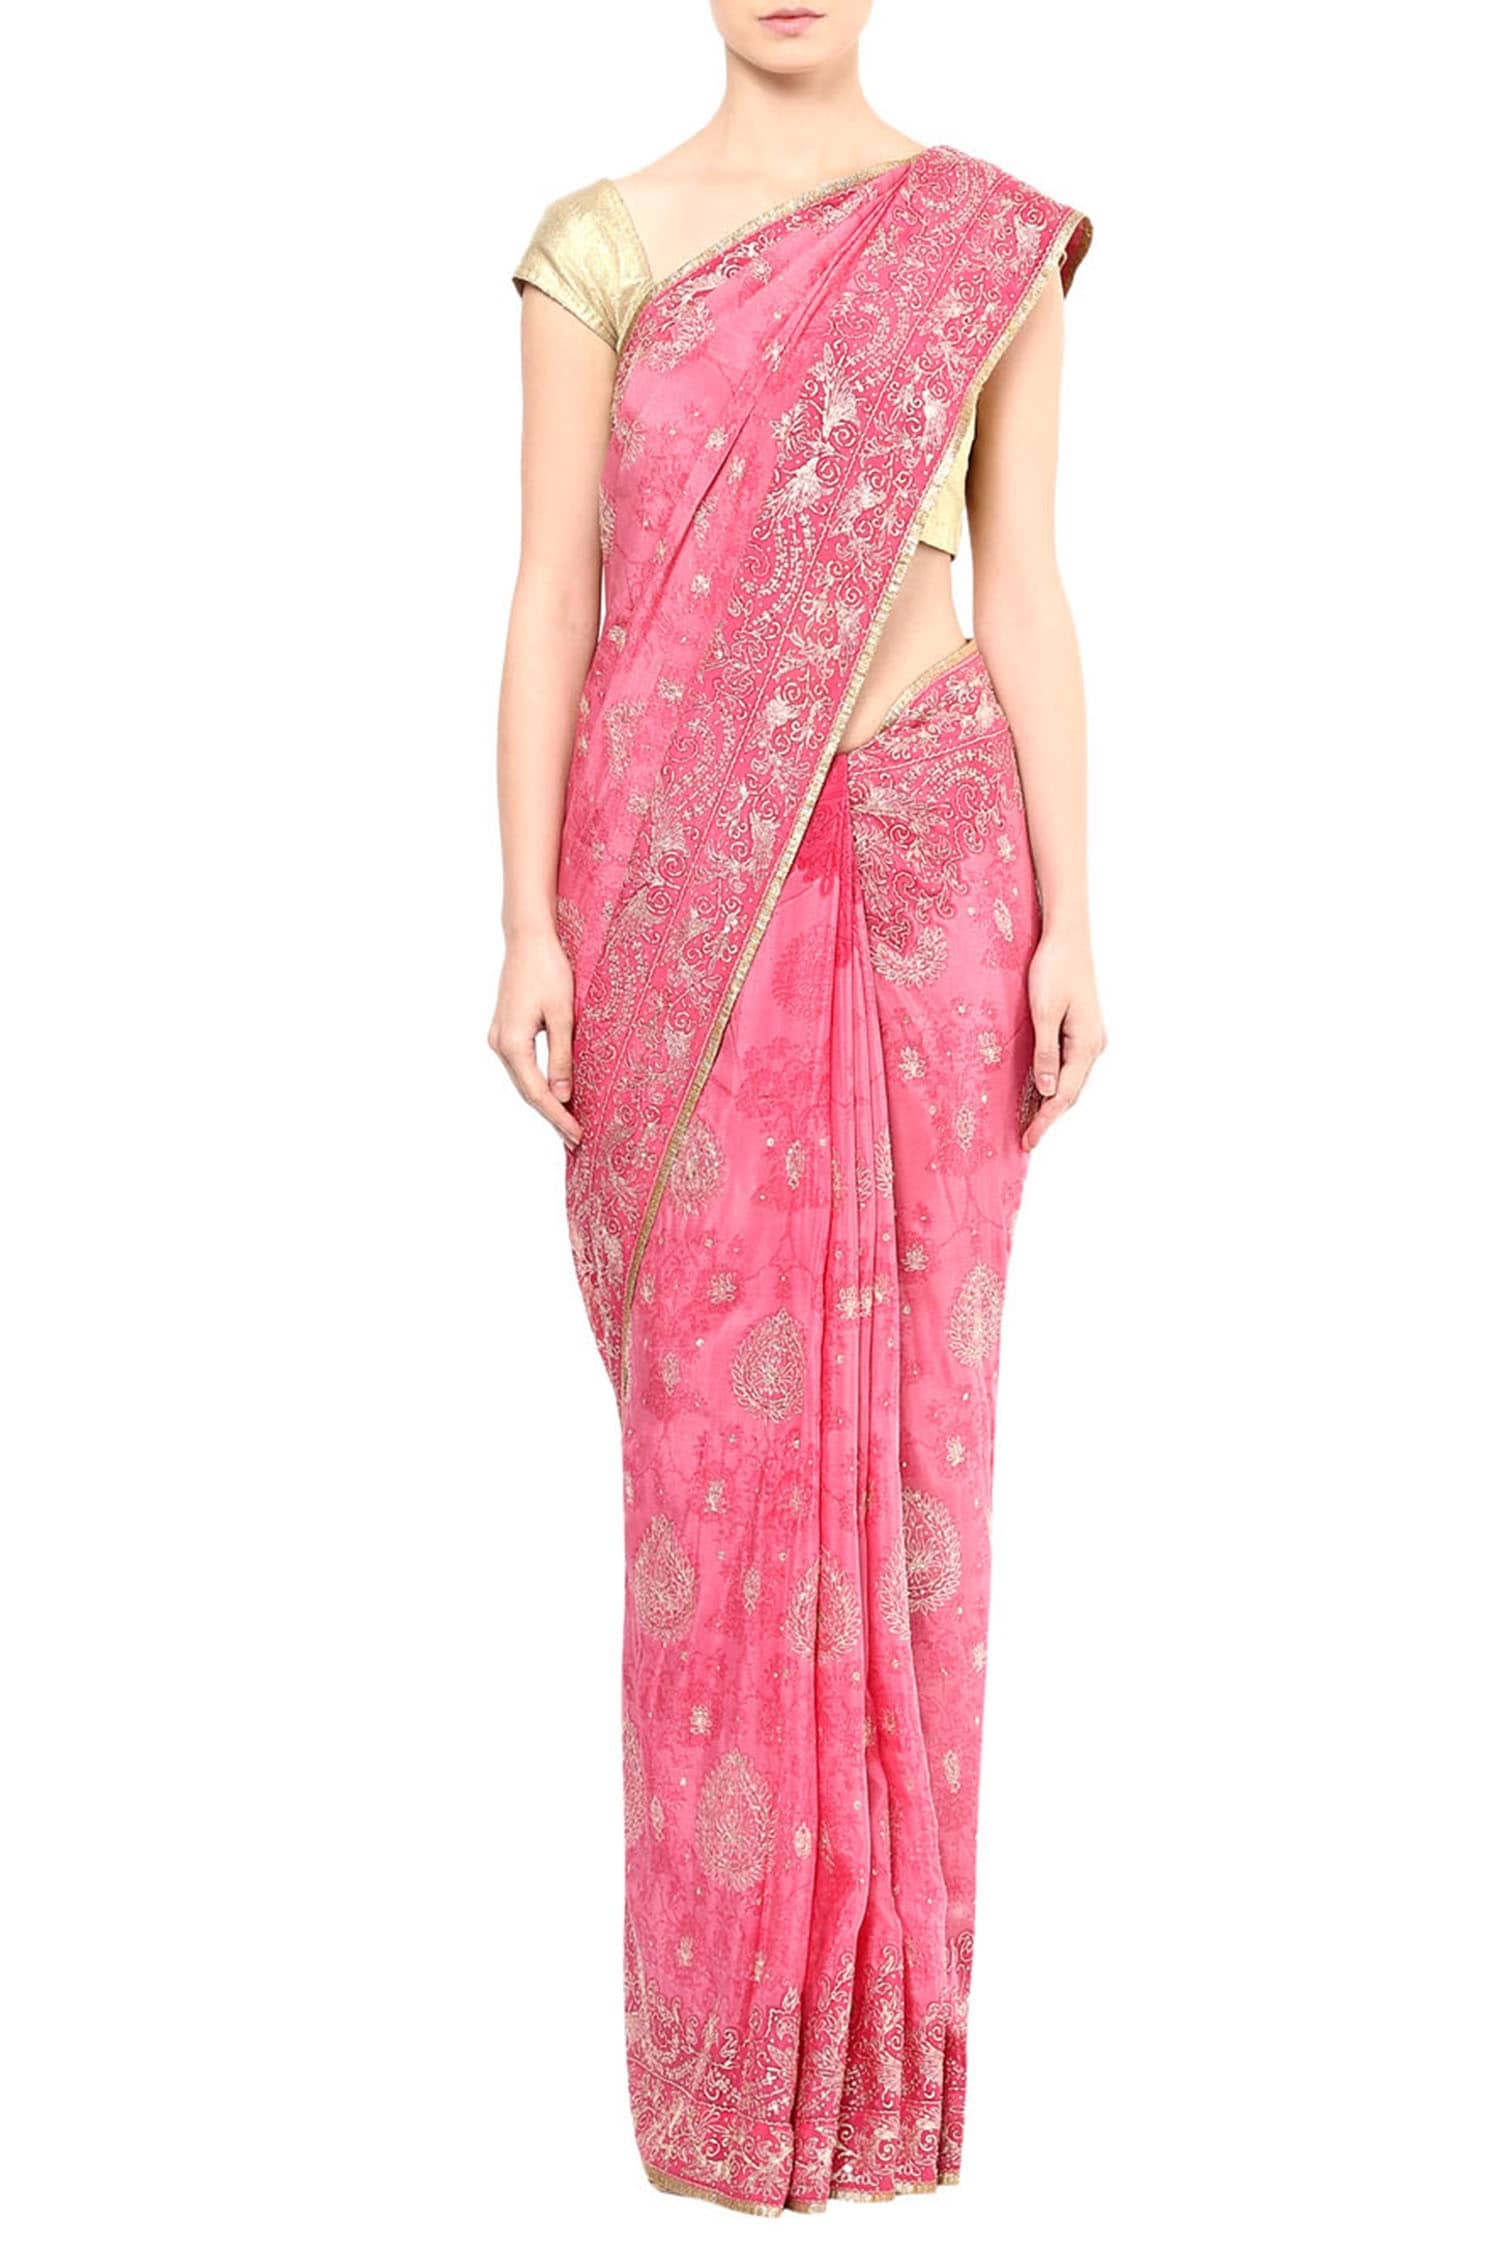 RI.Ritu Kumar Pink Embellished Saree